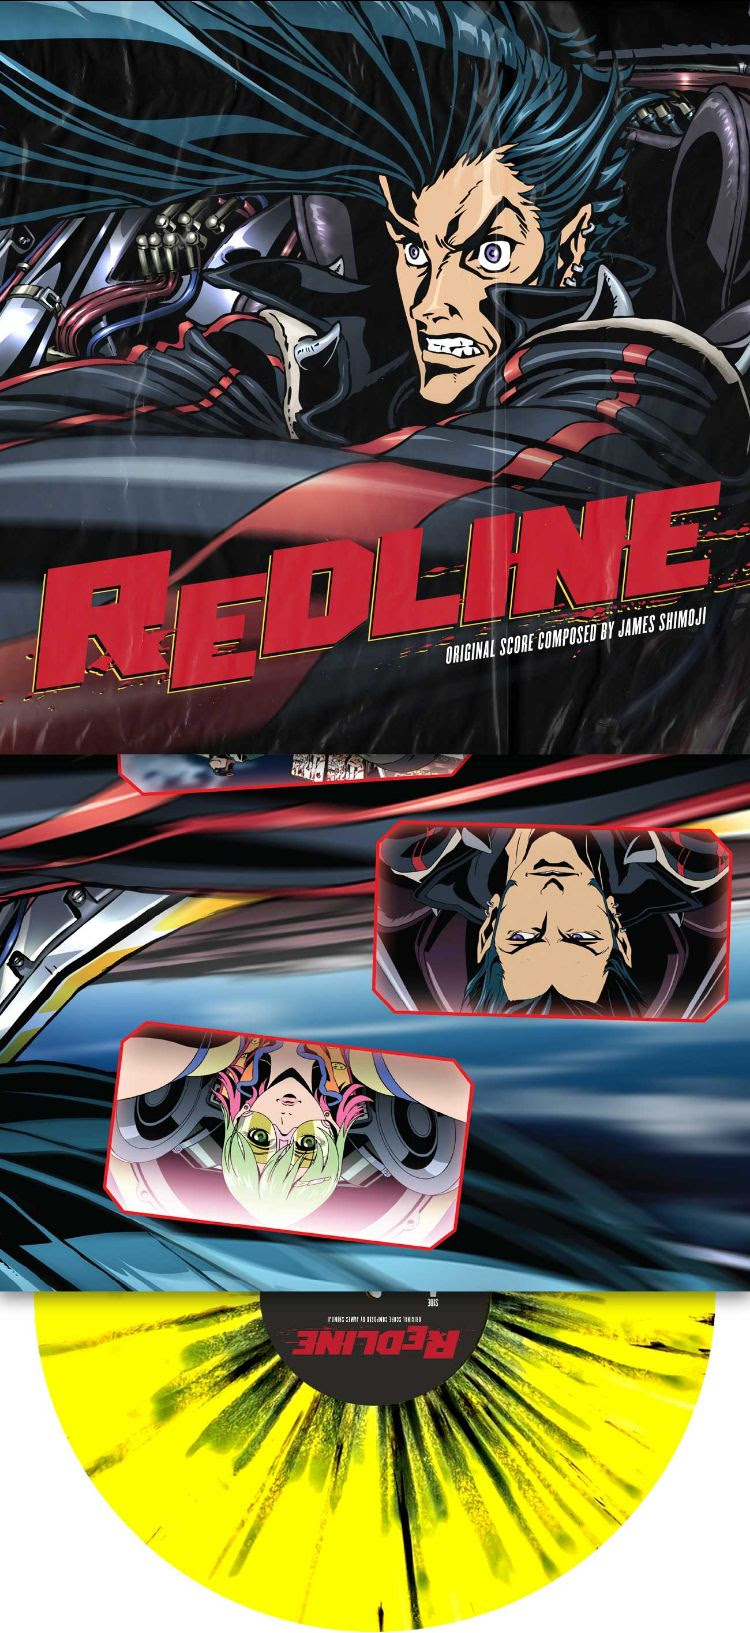 Crunchyroll - Redline Anime Film's Vinyl Soundtrack Pre-Orders Rev Up Today